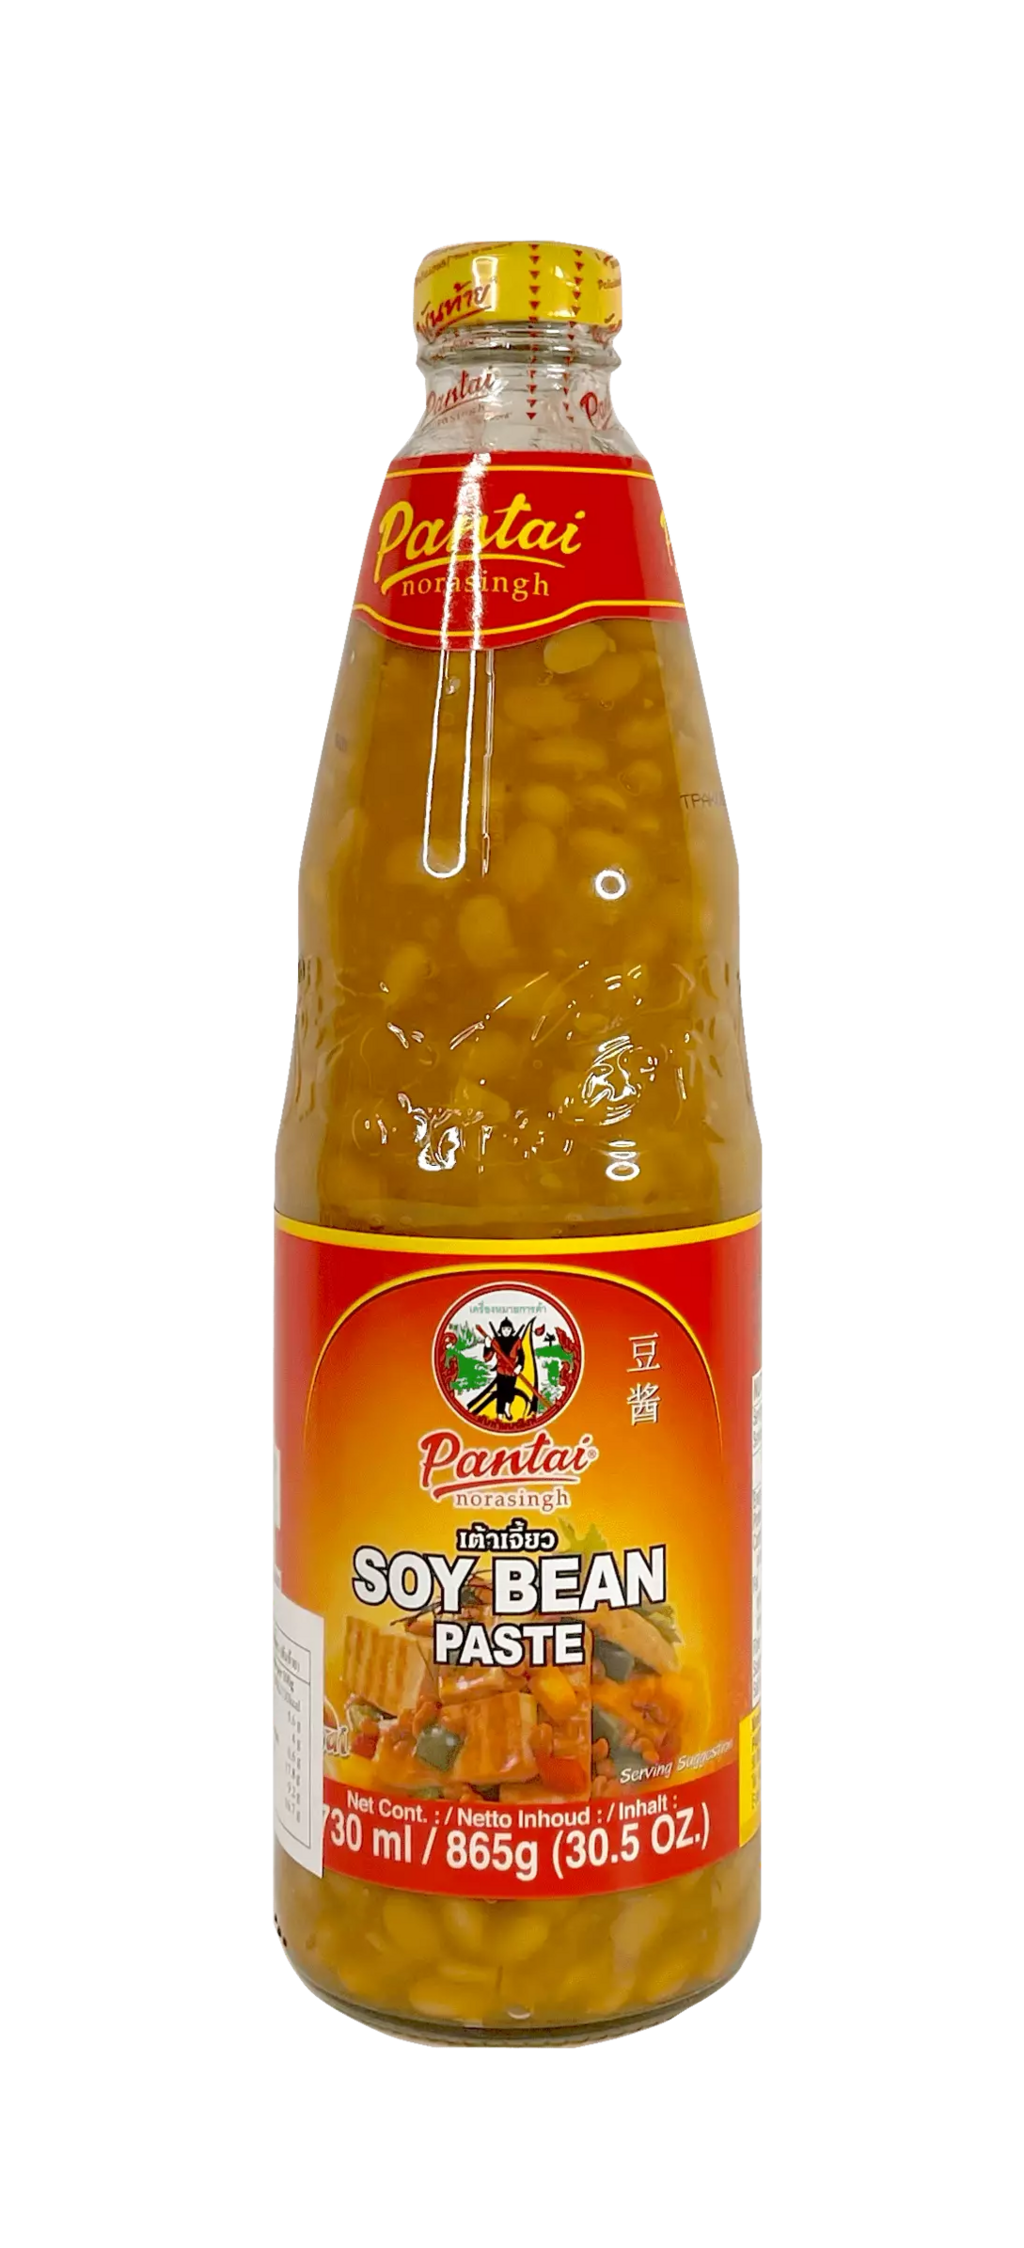 Soybean paste 730ml Pantai Norasingh Thailand